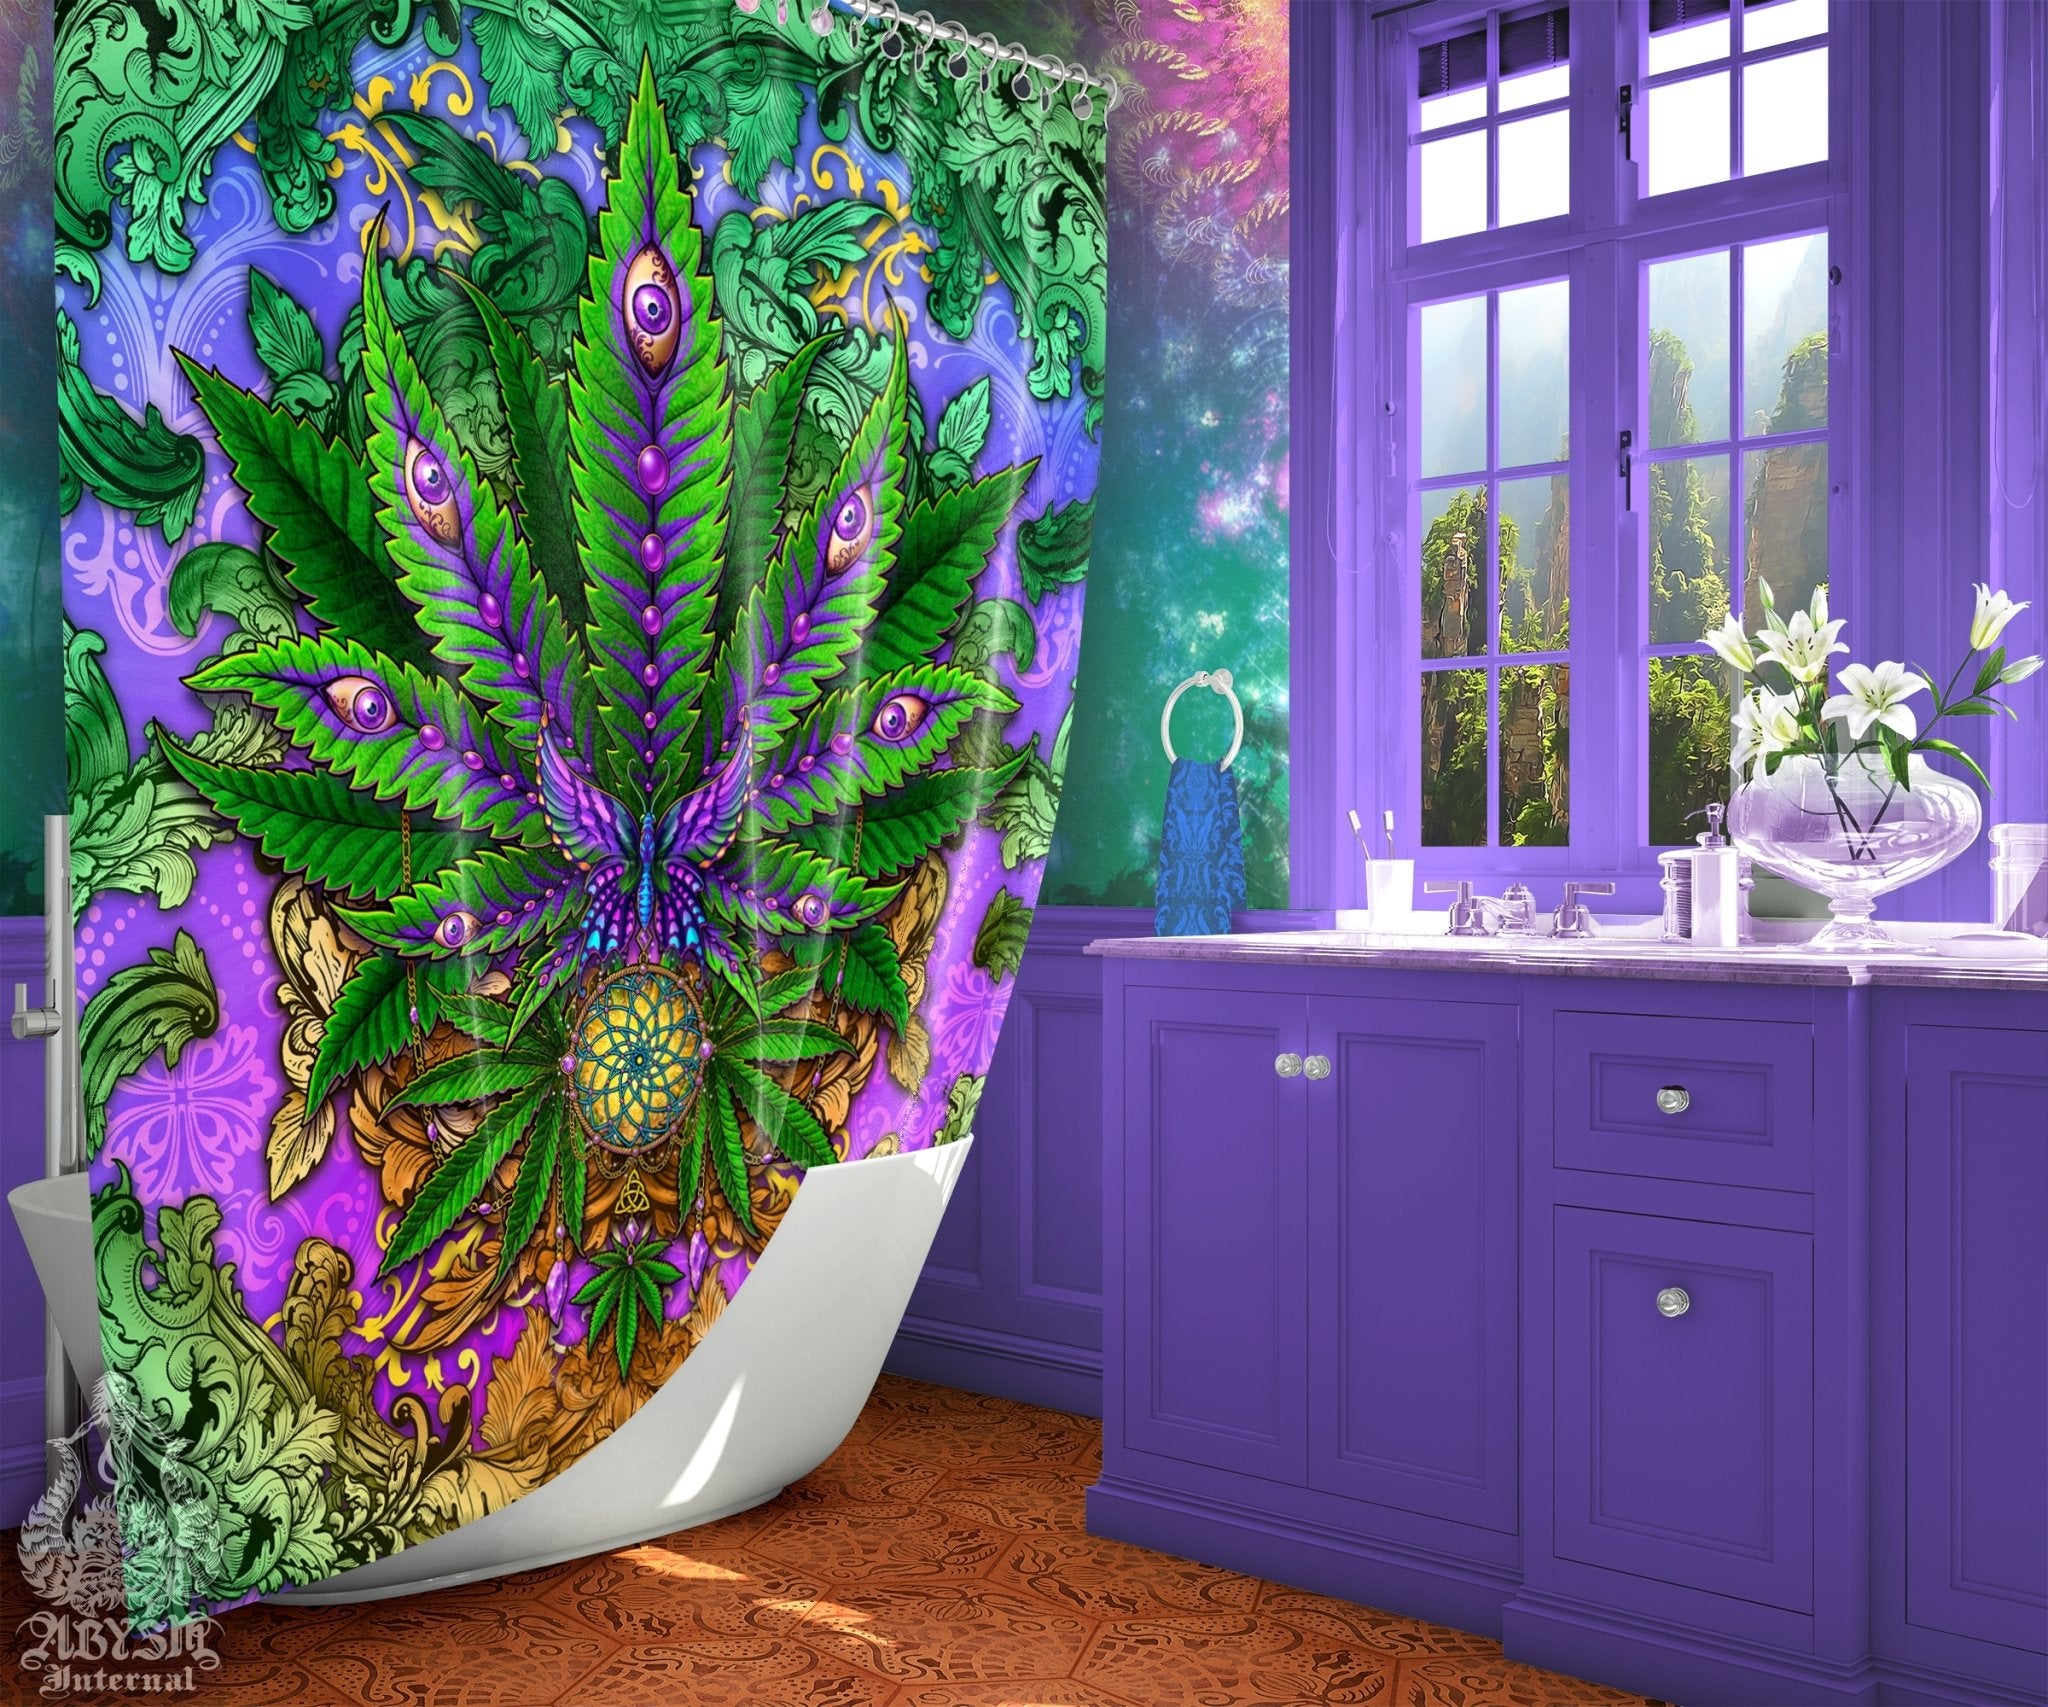 Weed Shower Curtain, Indie Bathroom Decor, Cannabis Print, Hippie 420 Home Art - Marijuana, Nature - Abysm Internal